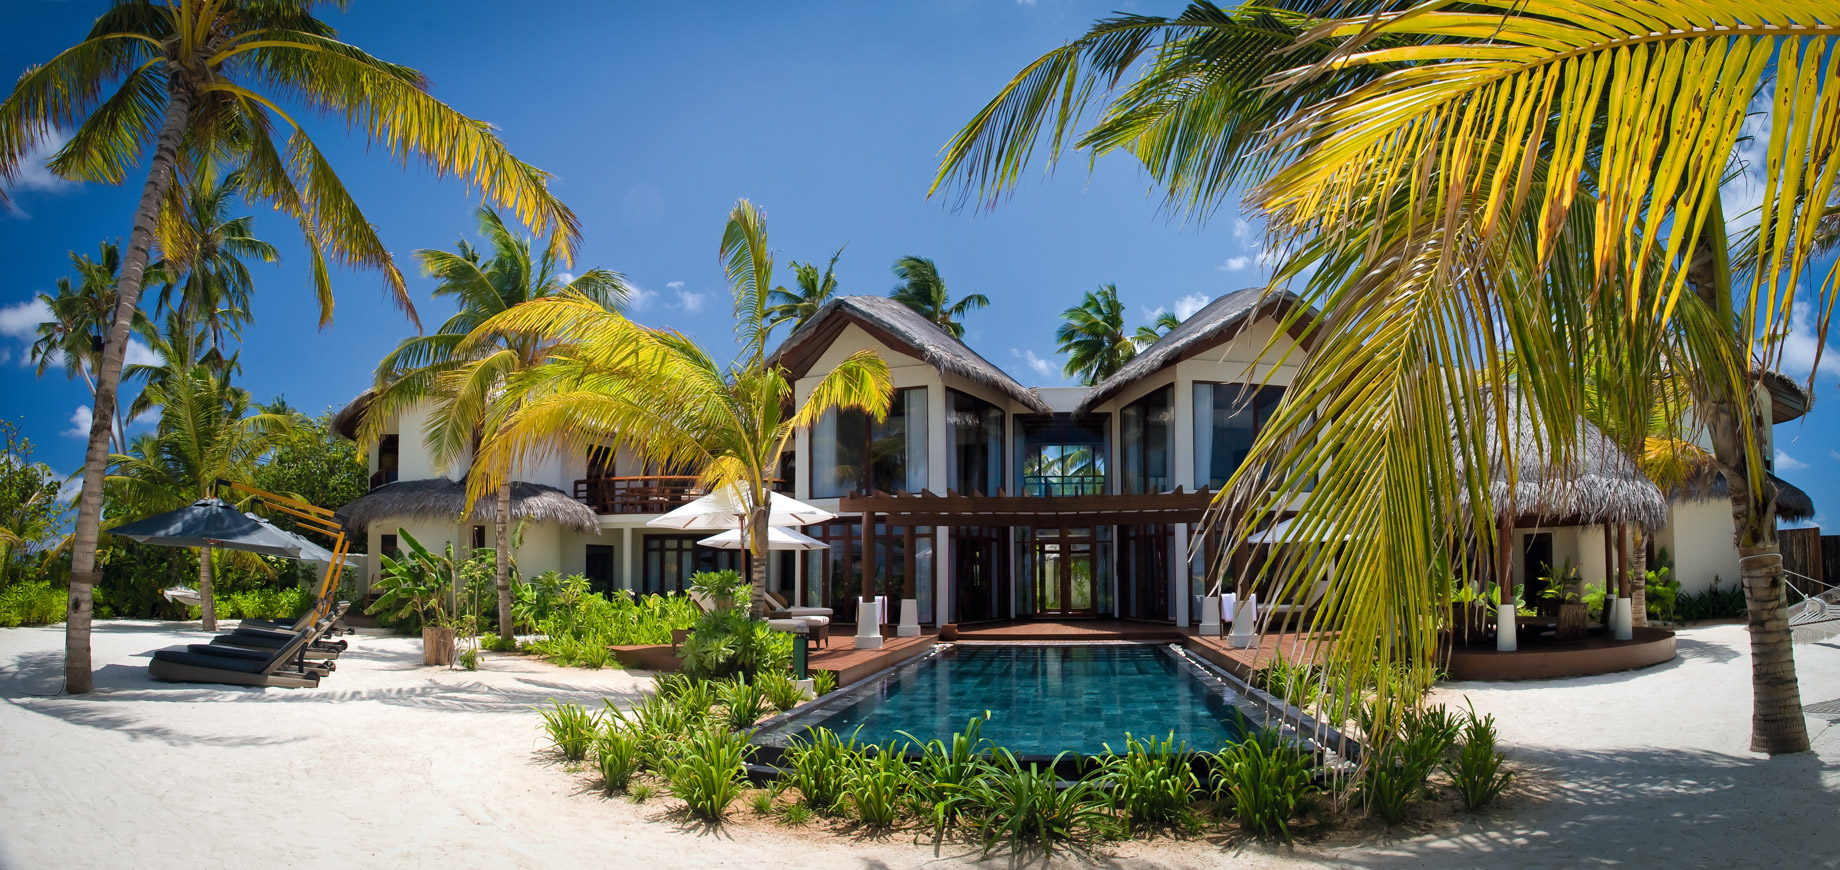 Constance Halaveli Resort – North Ari Atoll, Maldives – Presidential Villa Exterior View